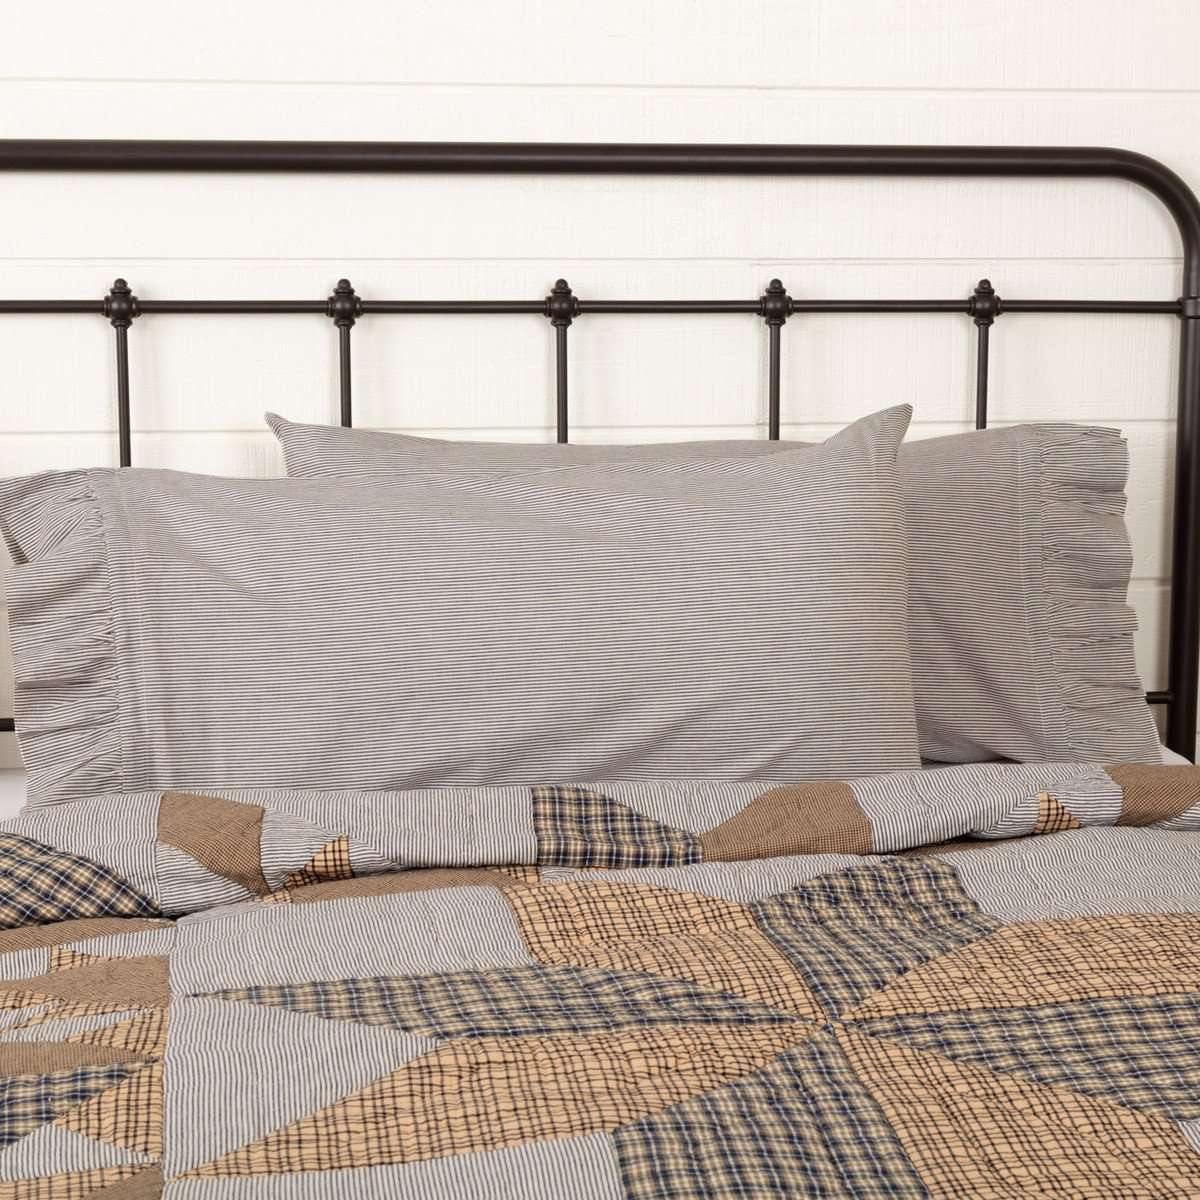 Dakota Star Farmhouse Blue Ticking Stripe King Pillow Case Set of 2 21x40 VHC Brands - The Fox Decor